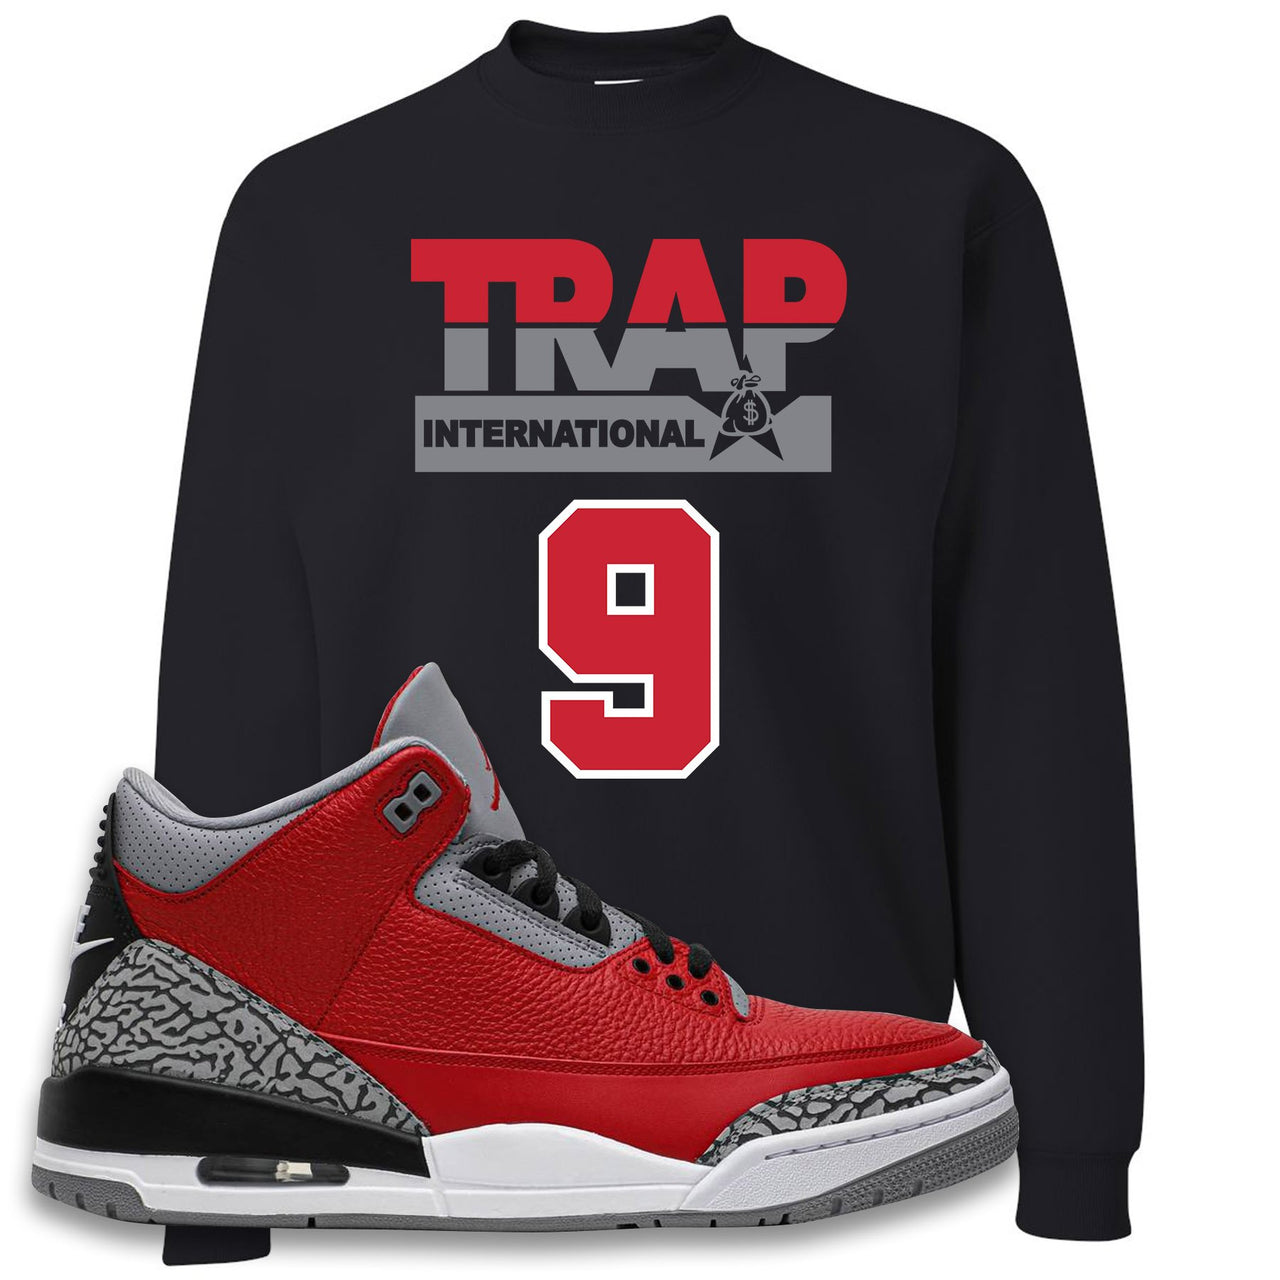 Chicago Exclusive Jordan 3 Red Cement Sneaker Black Crewneck Sweatshirt | Crewneck to match Jordan 3 All Star Red Cement Shoes | Trap International